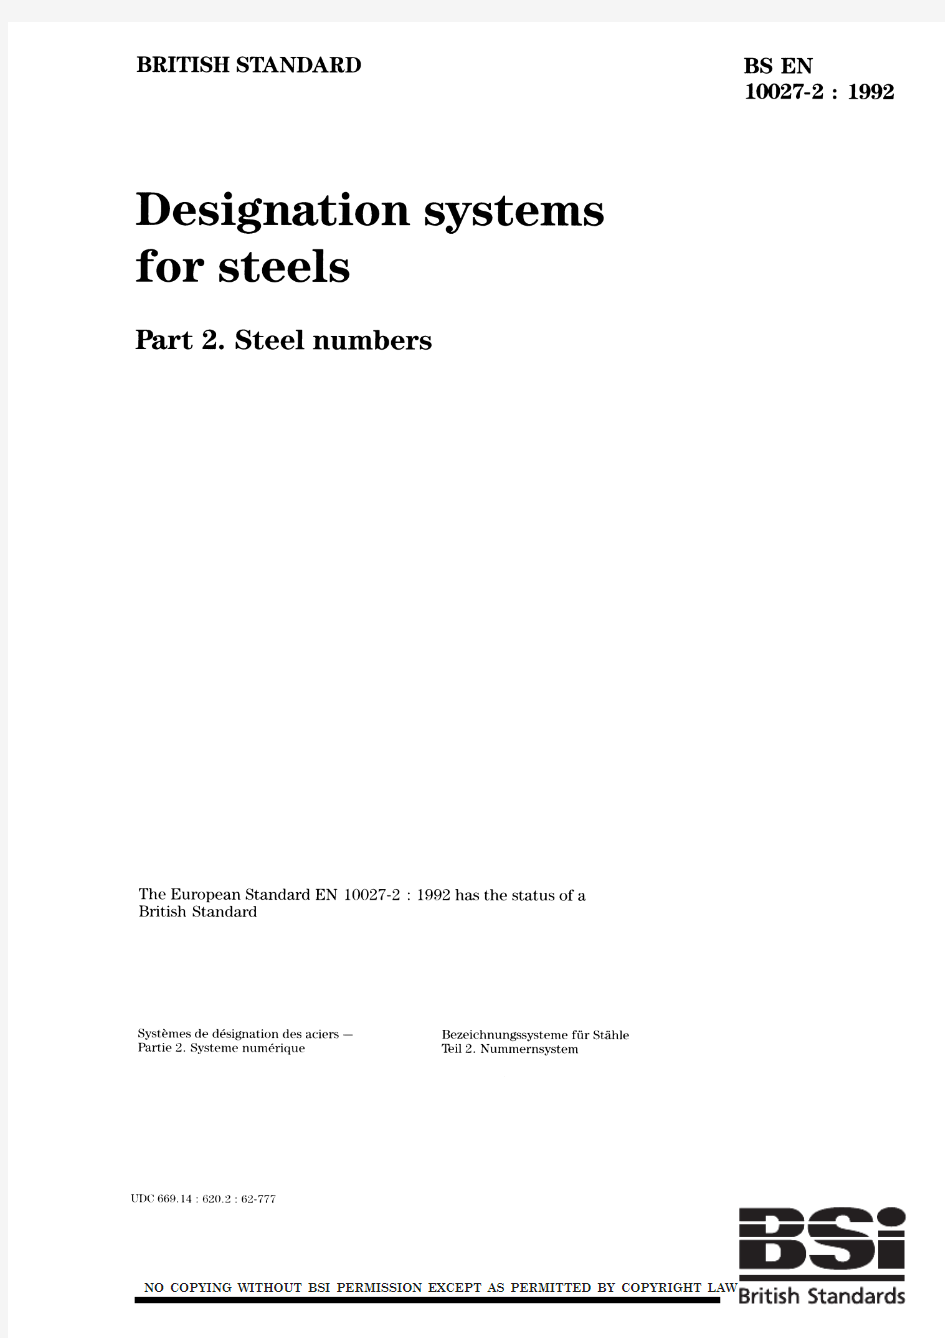 BS EN 10027-2;1992 钢的命名系统第2部分-钢号